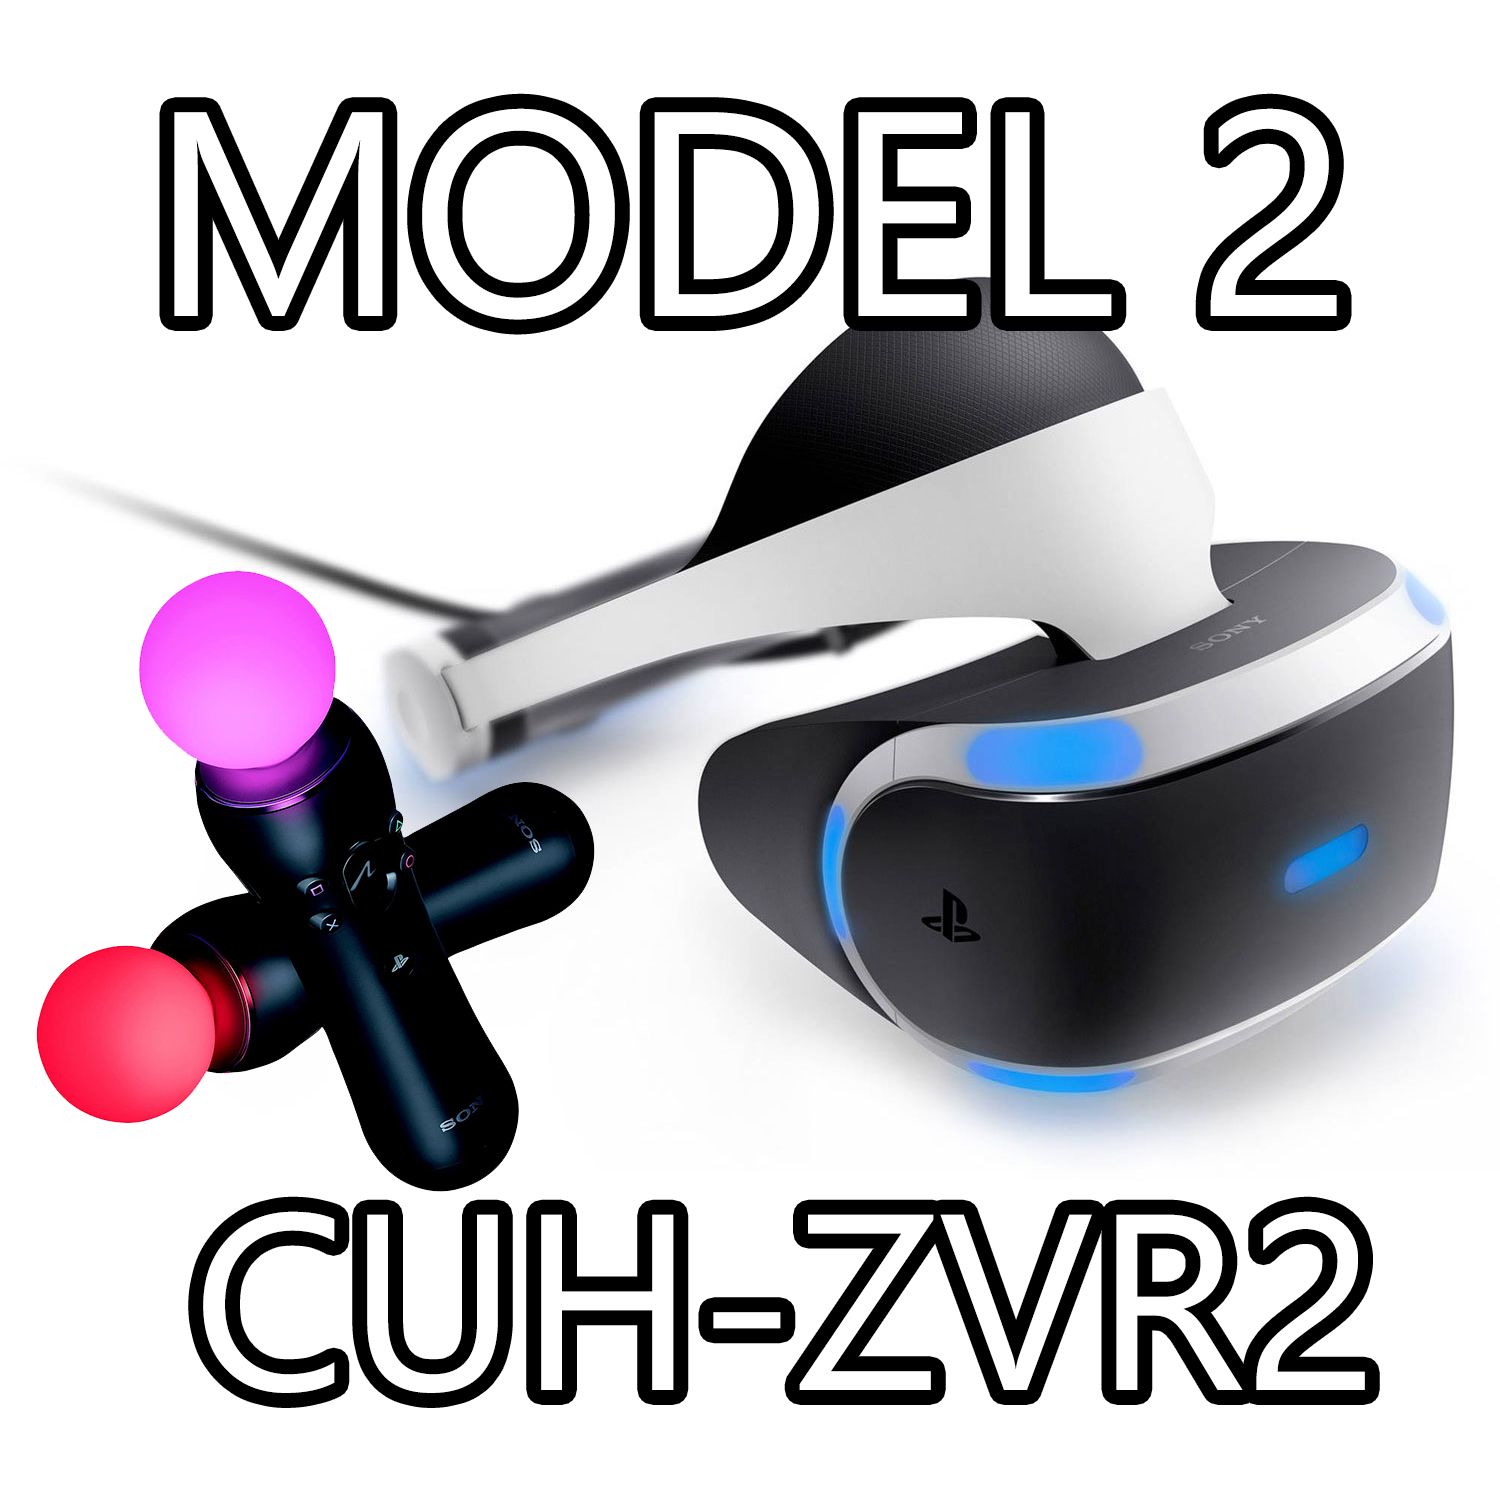 【PlayStation VR 】CUH-ZVR2【PS VR】